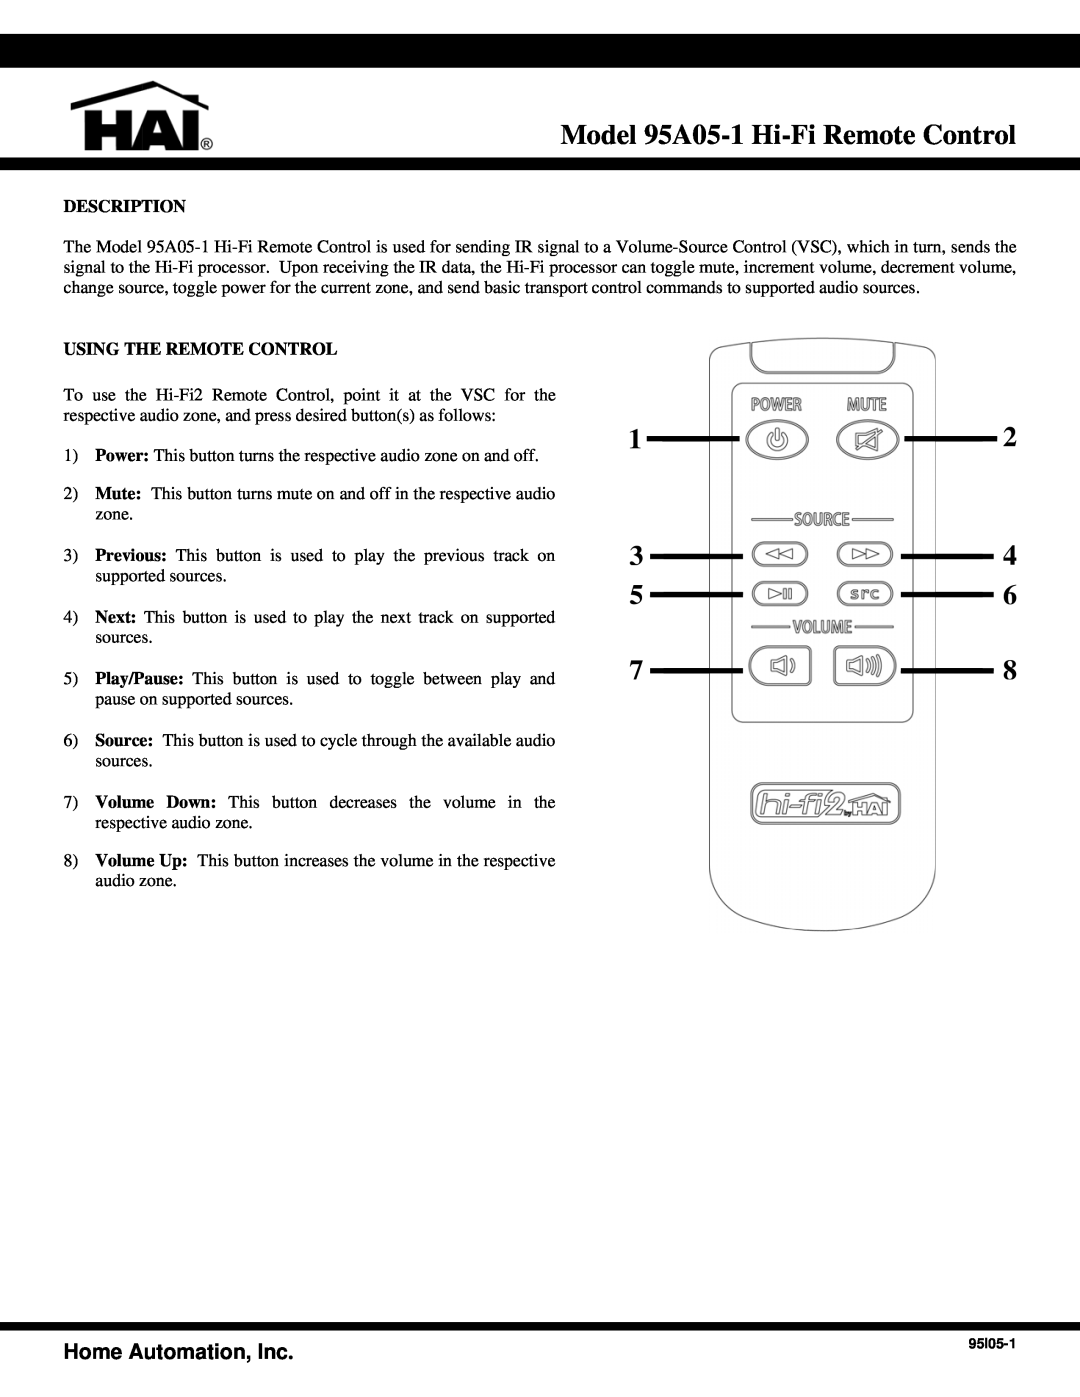 Home Automation manual Model 95A05-1 Hi-Fi Remote Control, Home Automation, Inc, Description, Using The Remote Control 